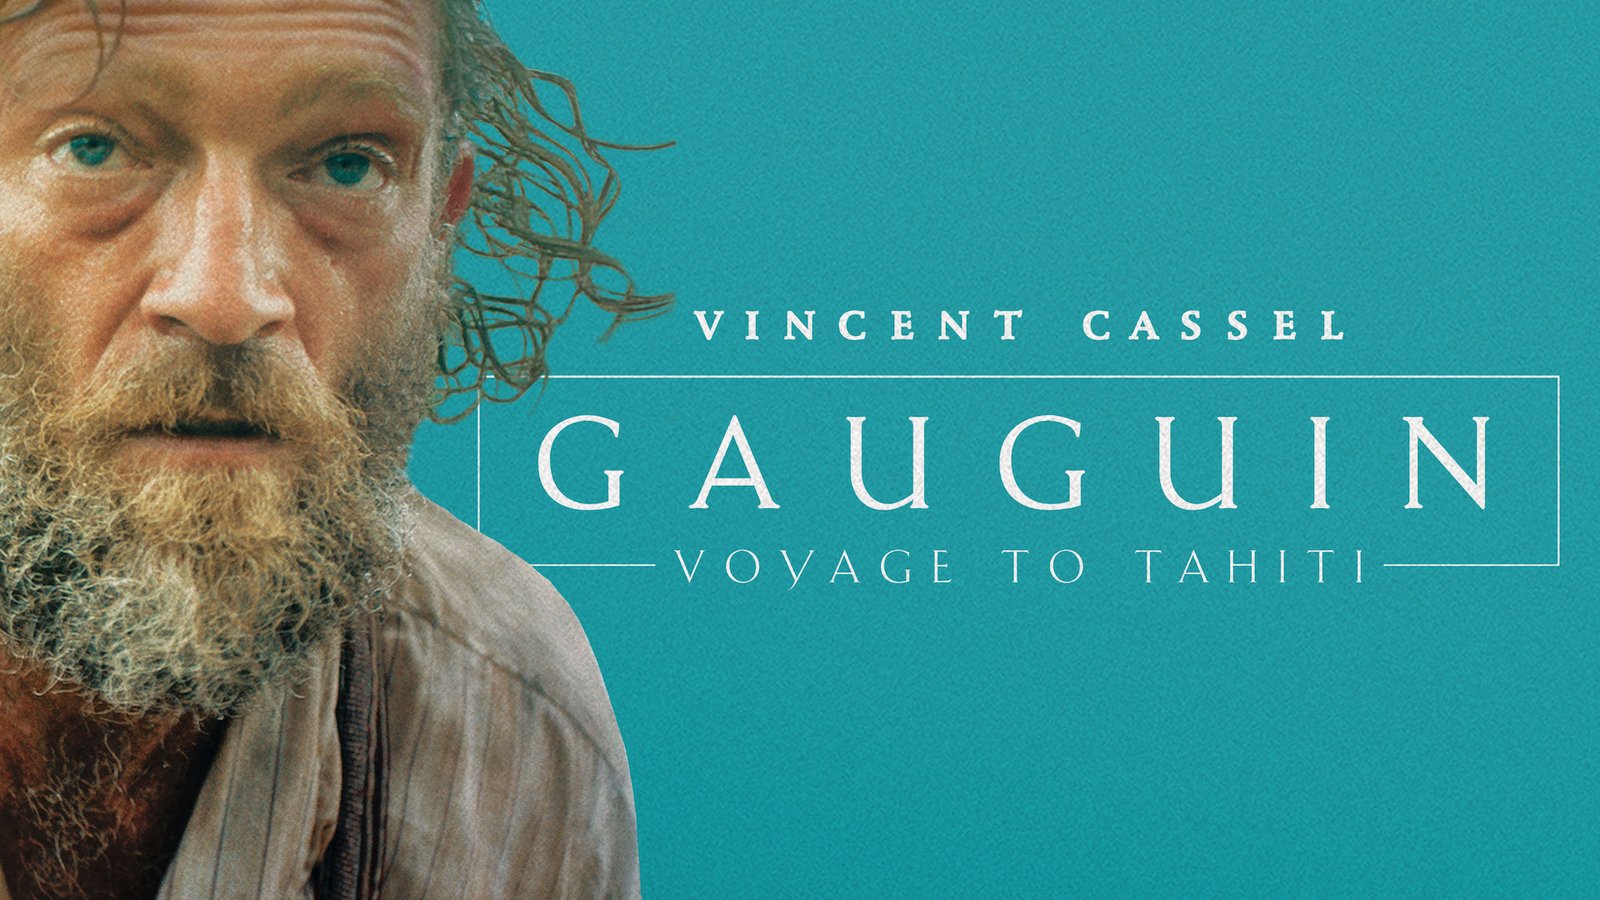 Gauguin: Voyage to Tahiti - Gauguin - Voyage de Tahiti